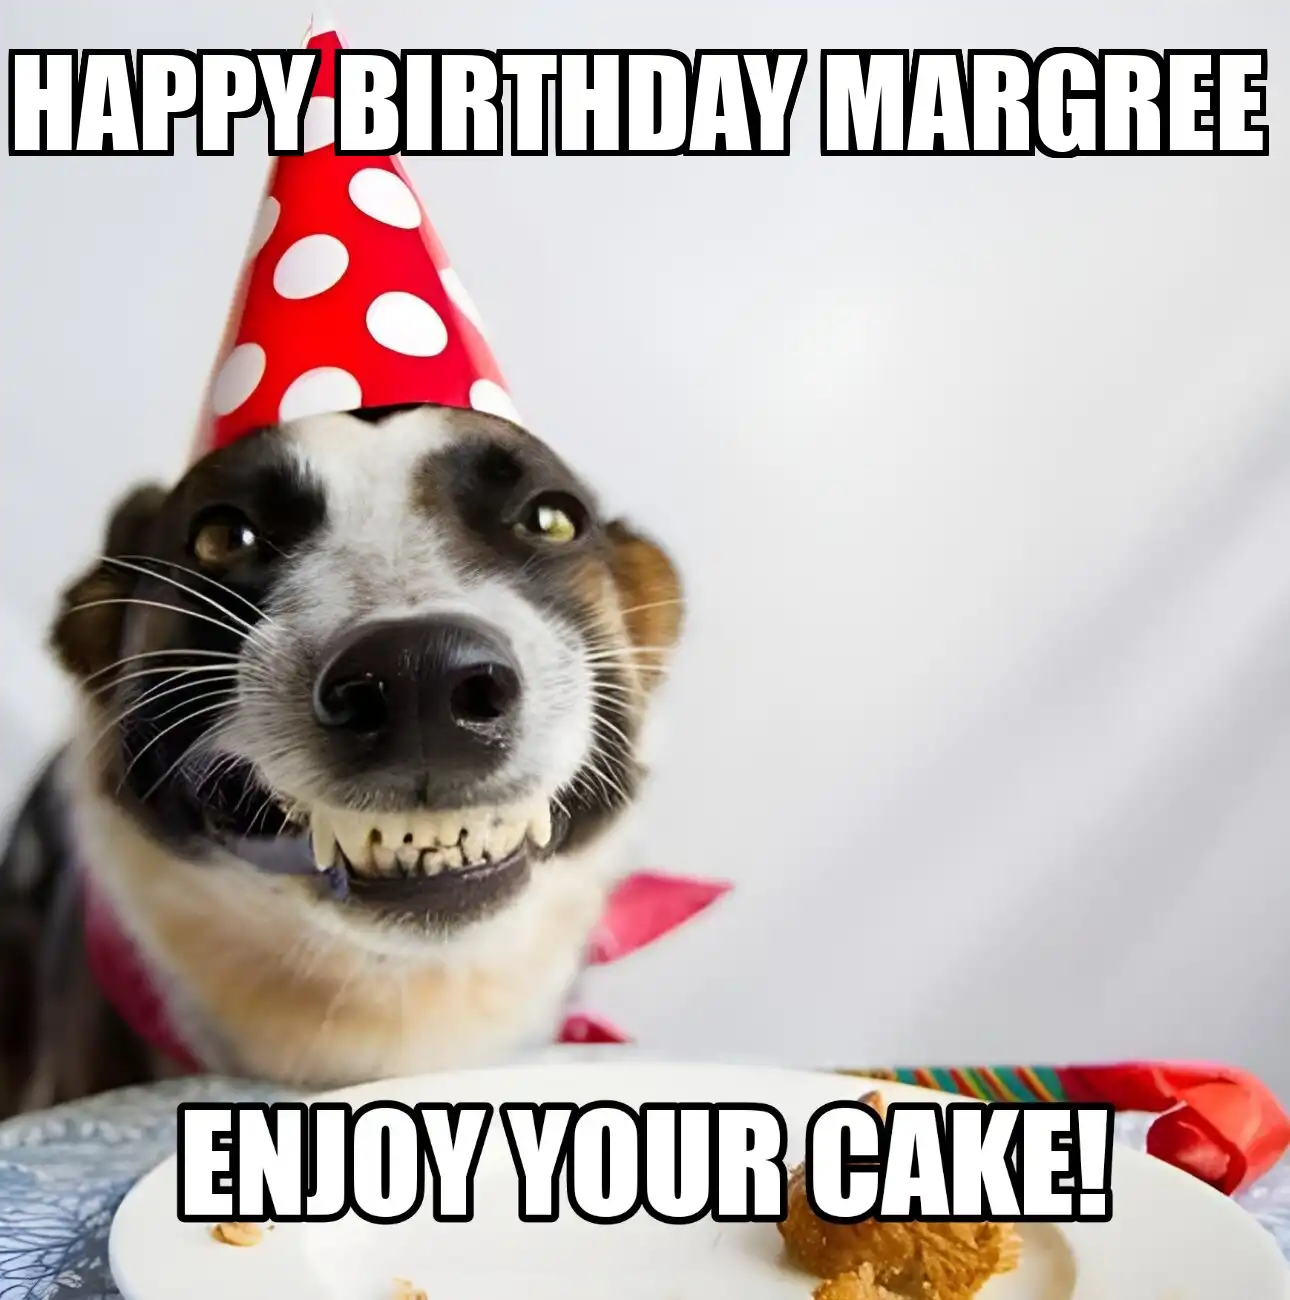 Happy Birthday Margree Enjoy Your Cake Dog Meme